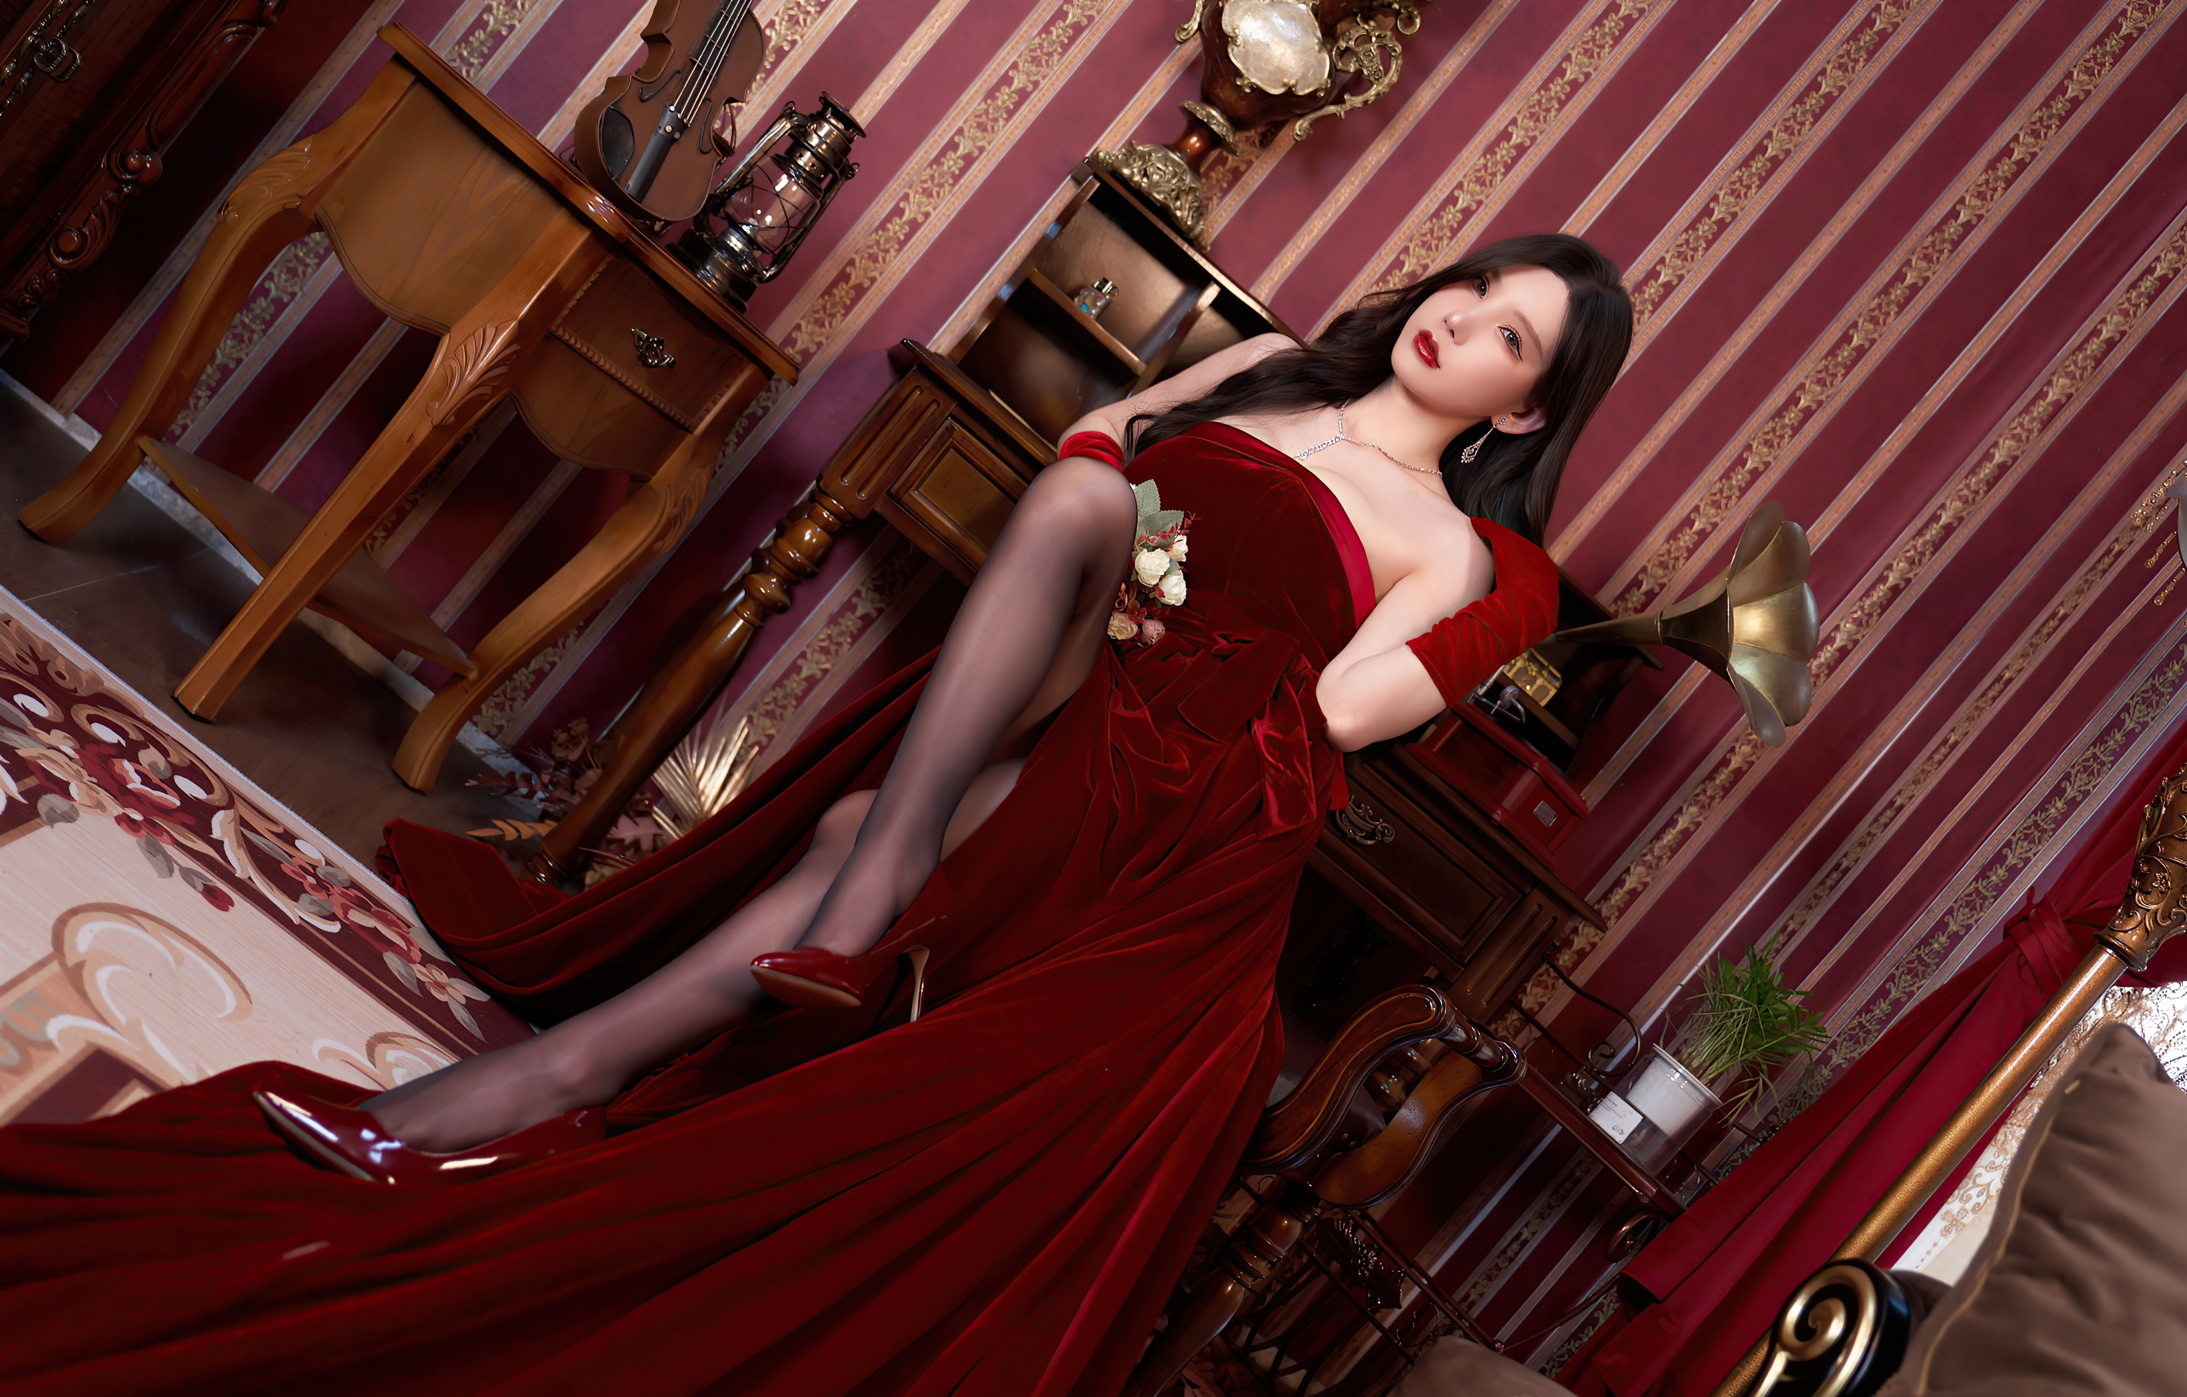 Asian Model Women Long Hair Dark Hair Sitting Nylons High Heels Dress Red Dress 2187x1397